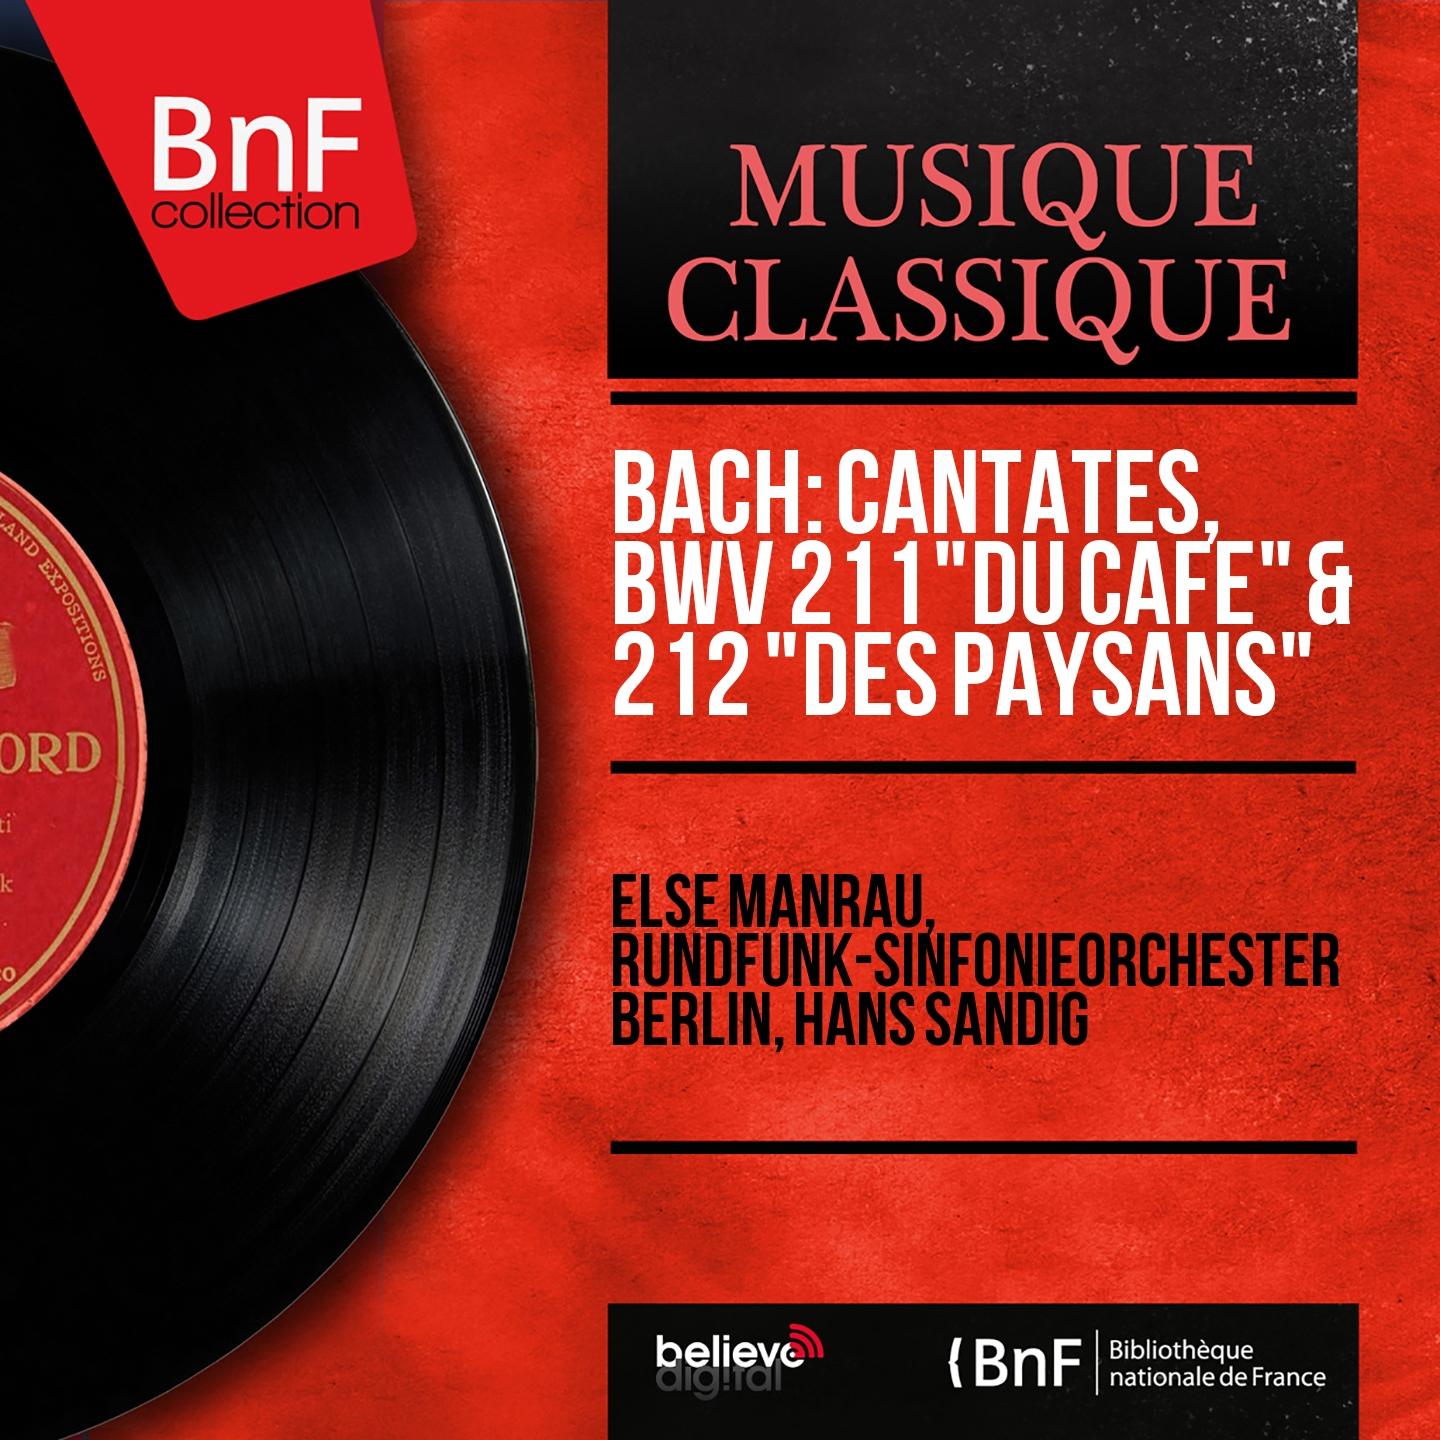 Bach: Cantates, BWV 211 "Du café" & 212 "Des paysans" (Mono Version)